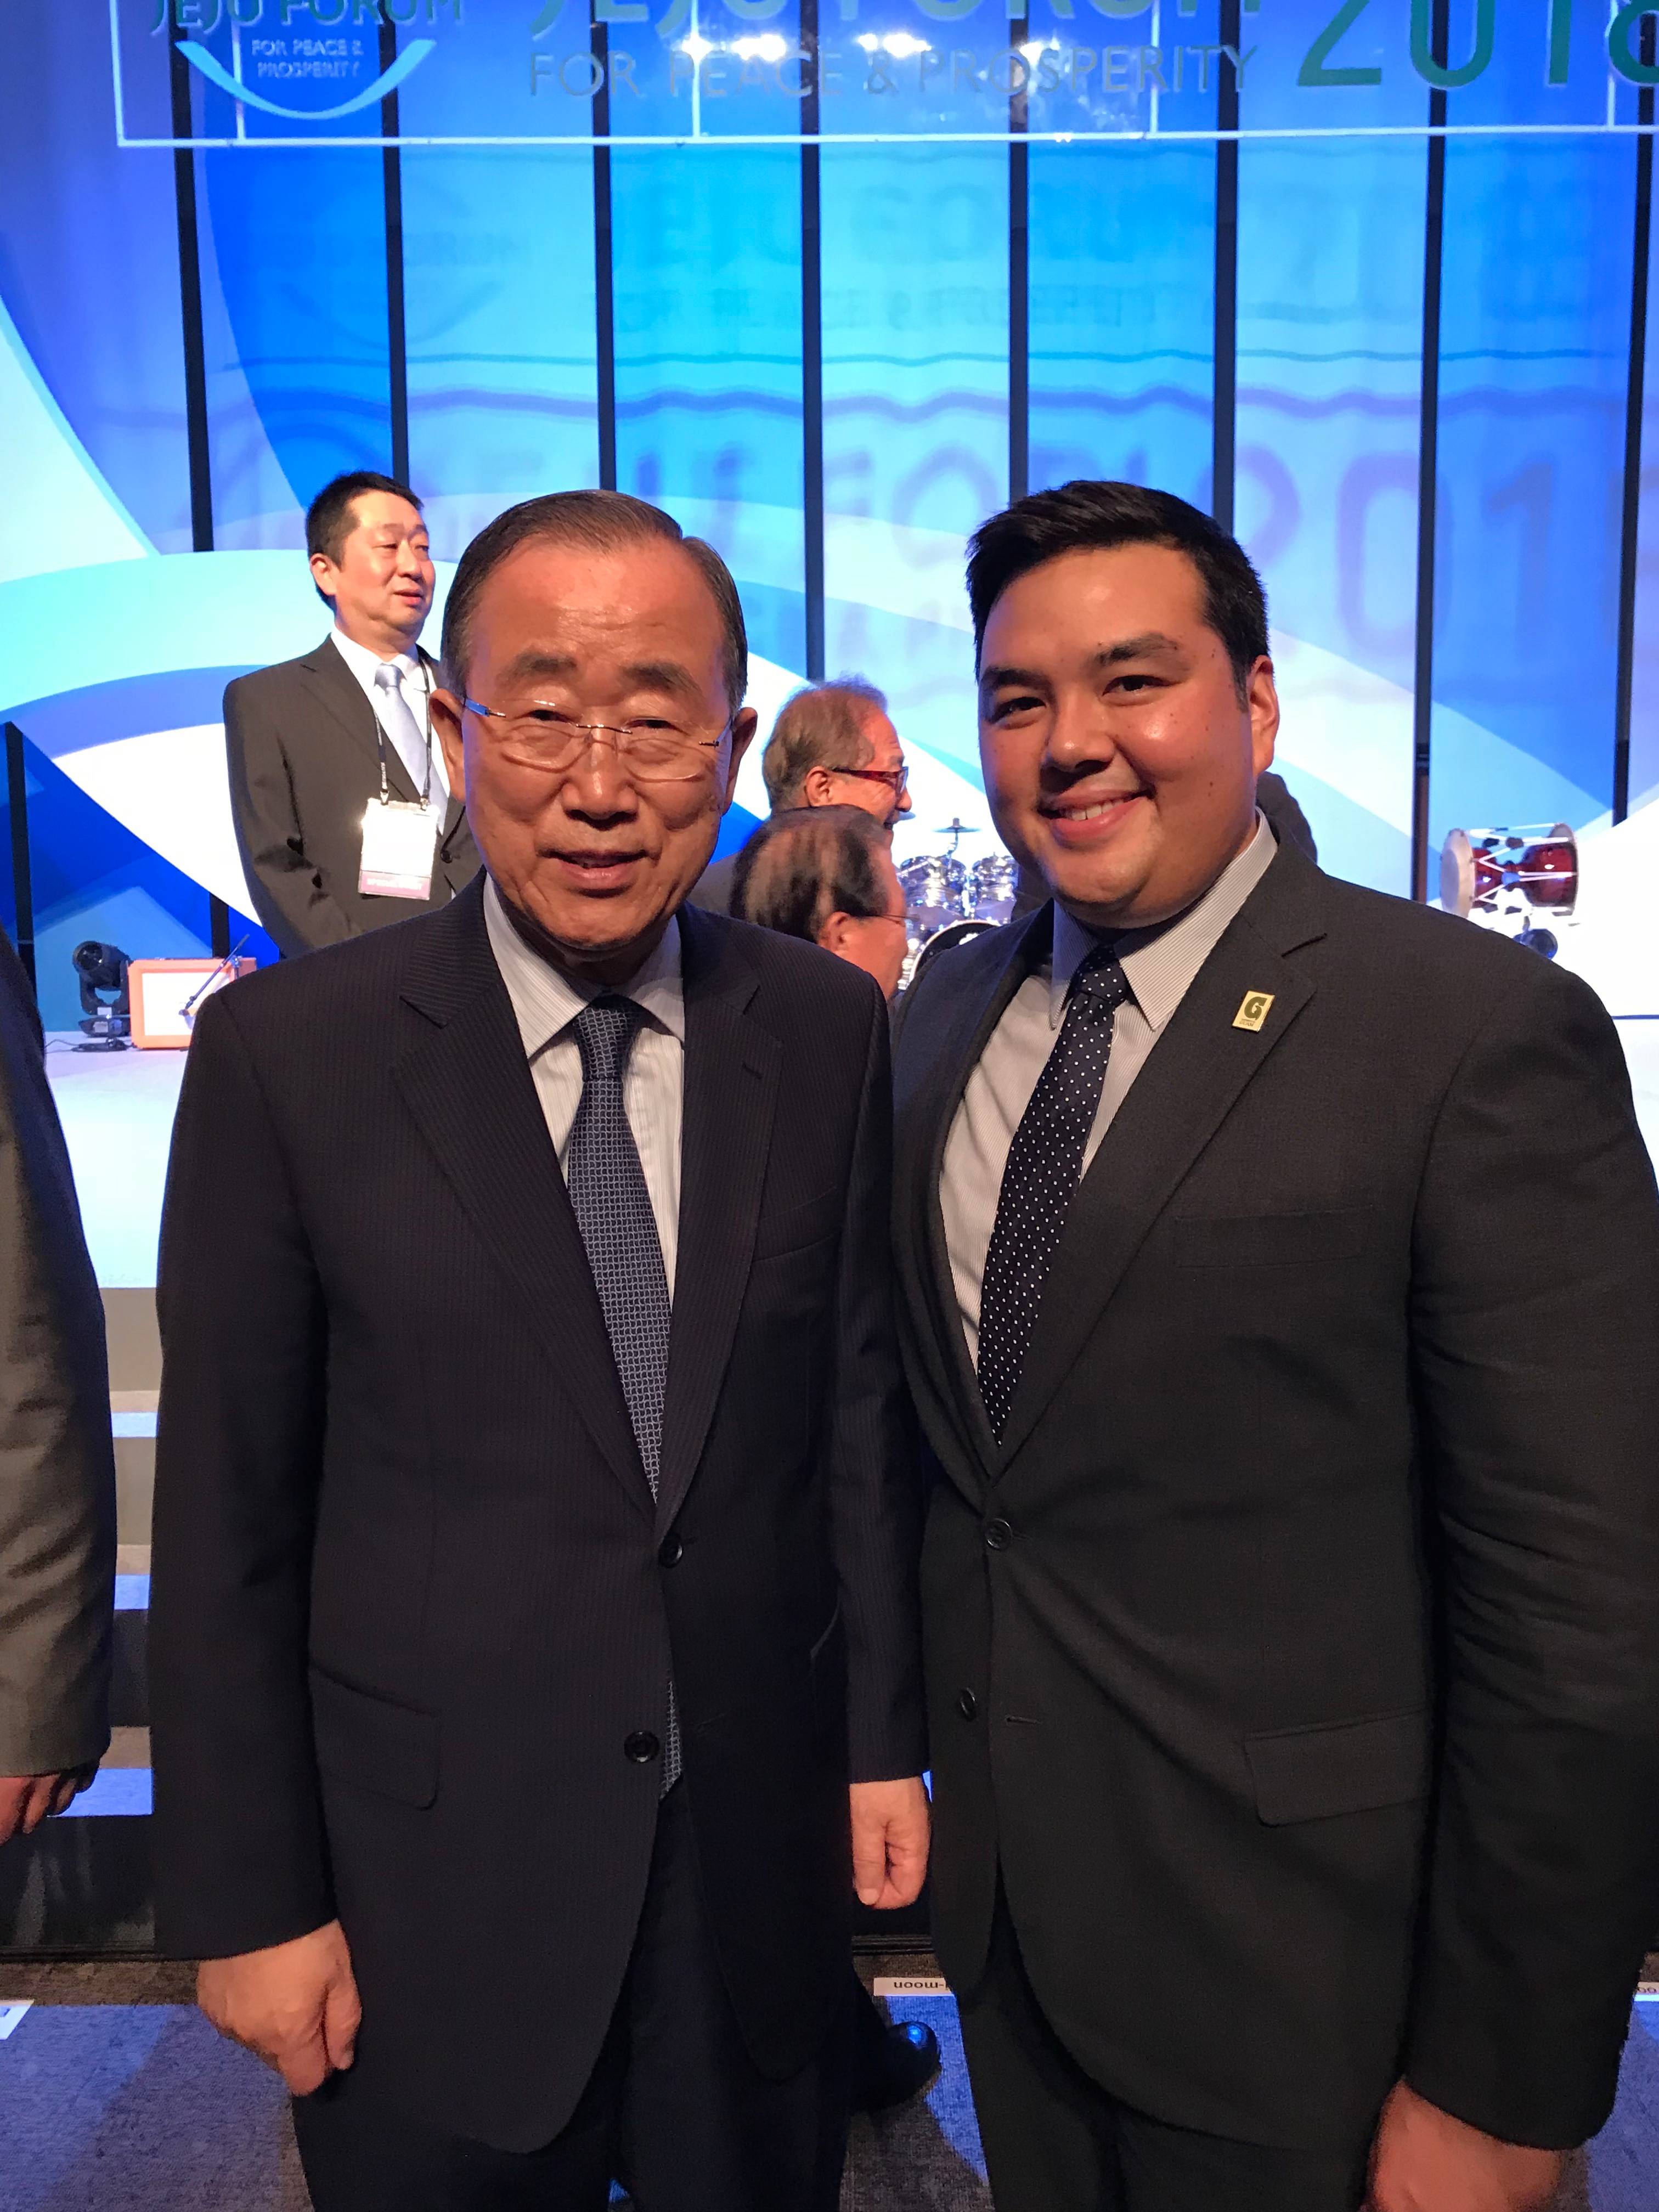 Austin Shelton and Ban Ki-moon